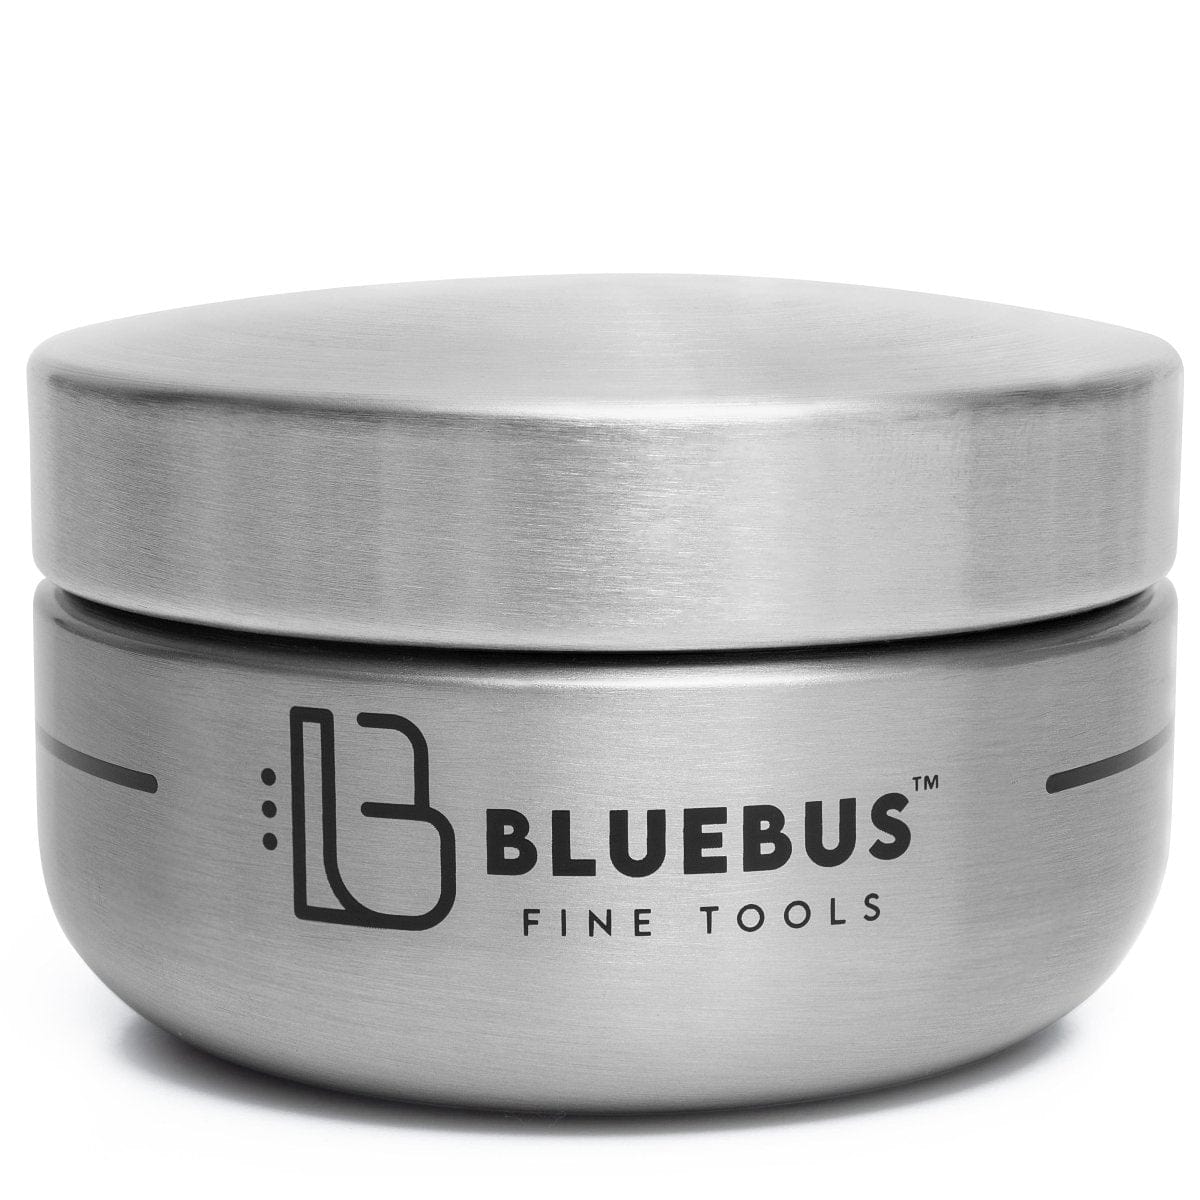 Blue Bus fine tools Container Silver / 265 ml Blue Bus BUNKER Airtight Stash Jar